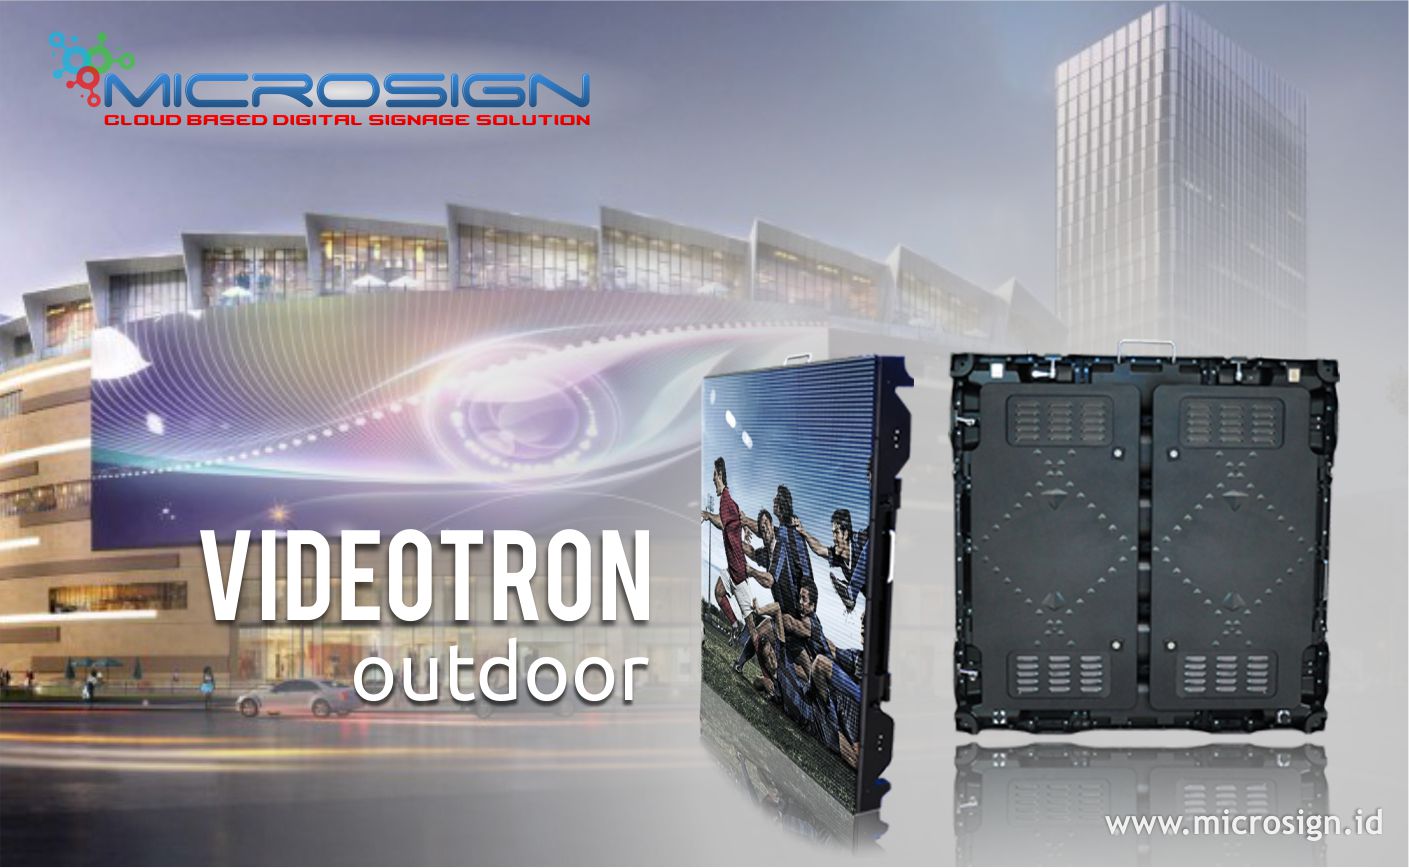 Microsign Videotron outdoor